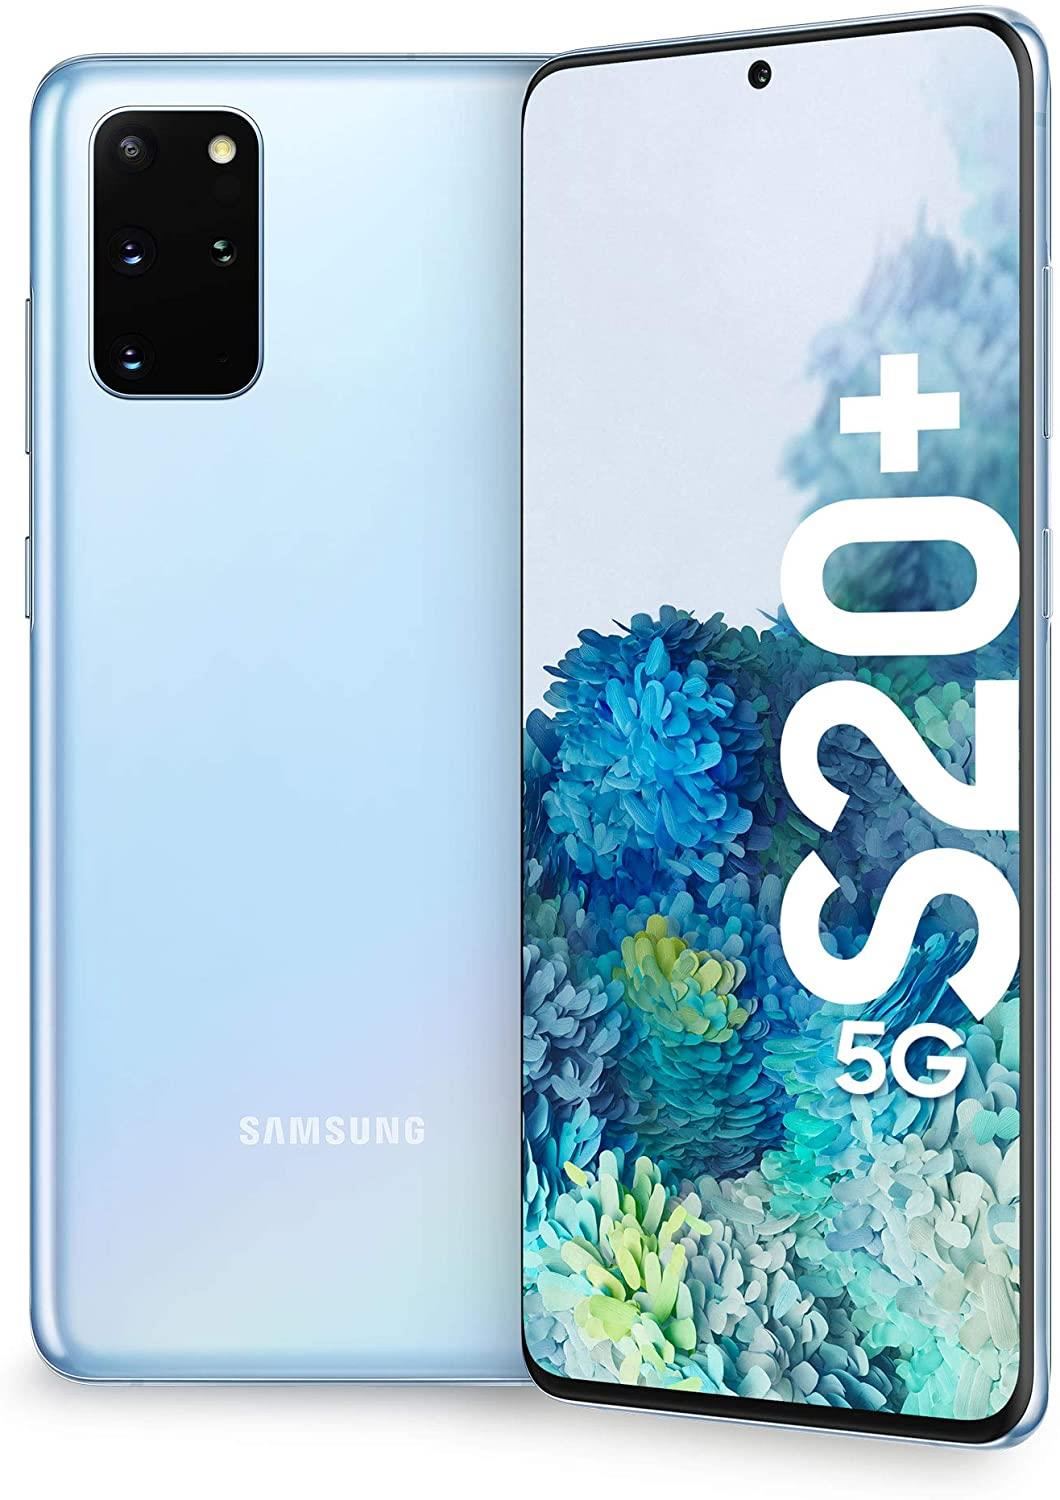 Samsung Galaxy S20 Plus 5G Smartphone Unlocked 128-256-512GB